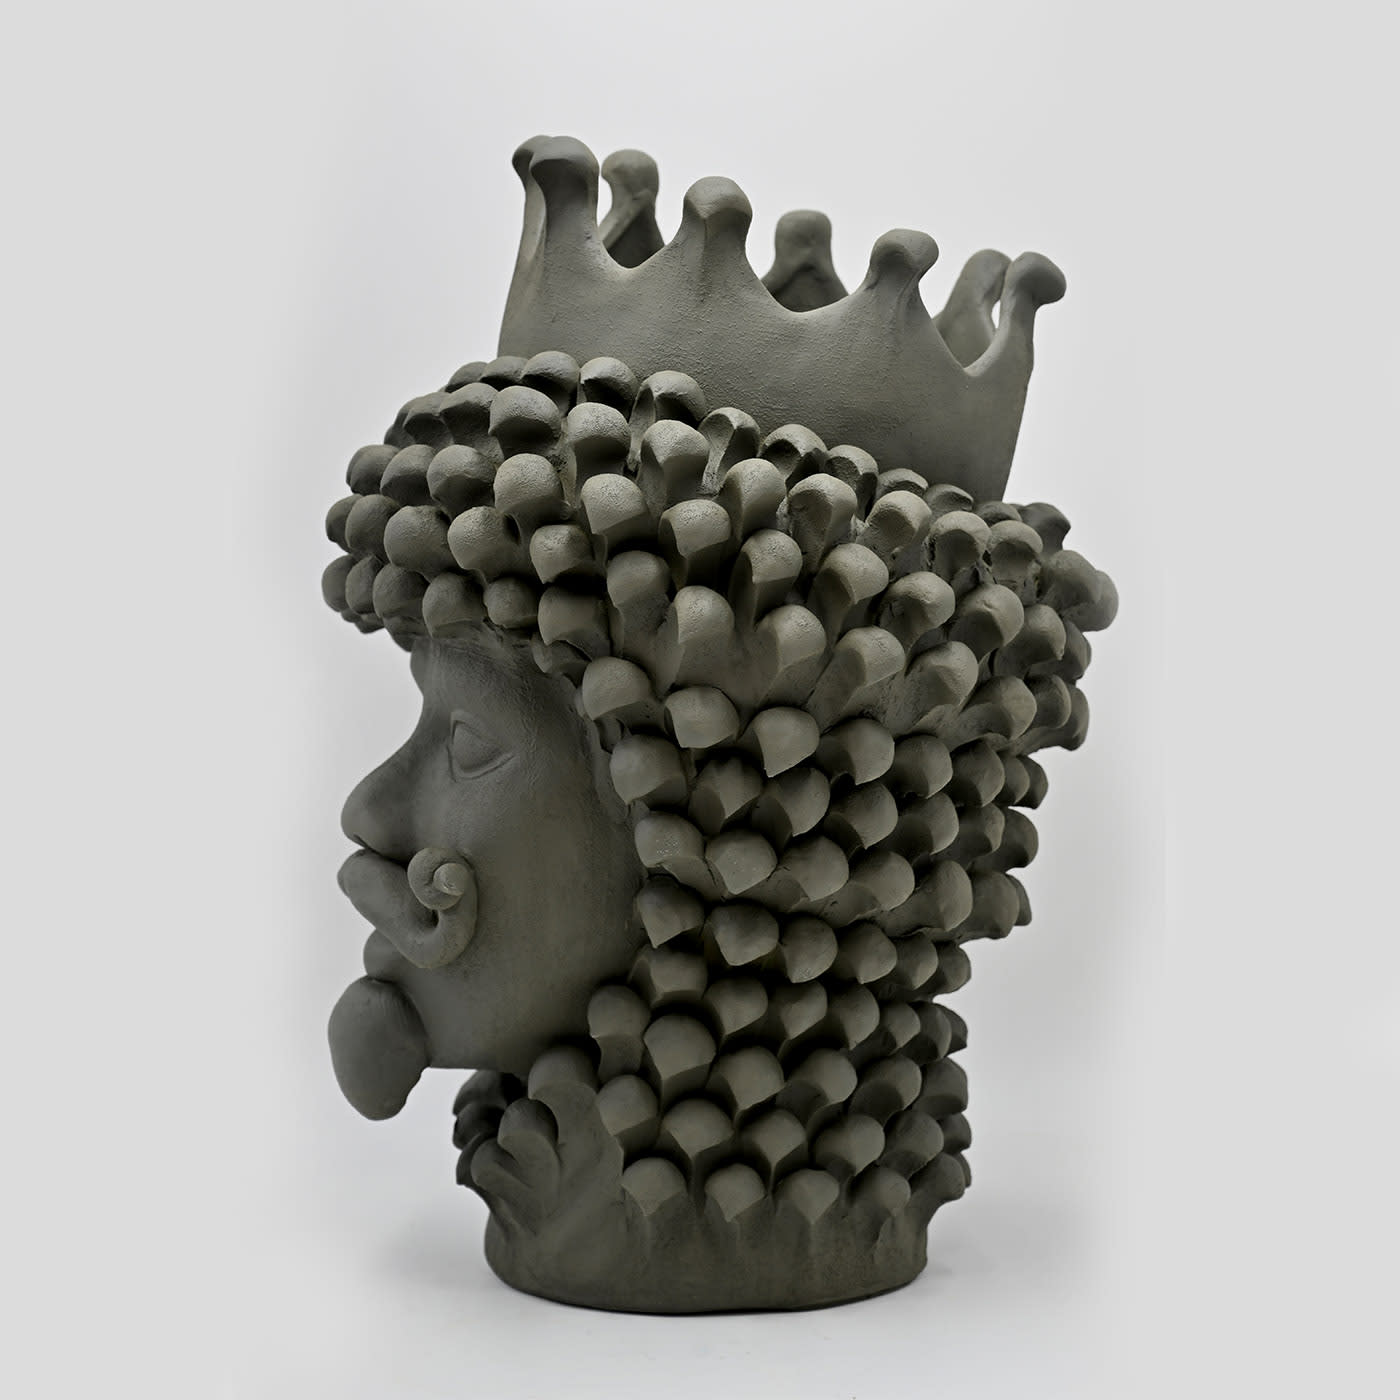 Smoky Grey Moor's Head Sculpture